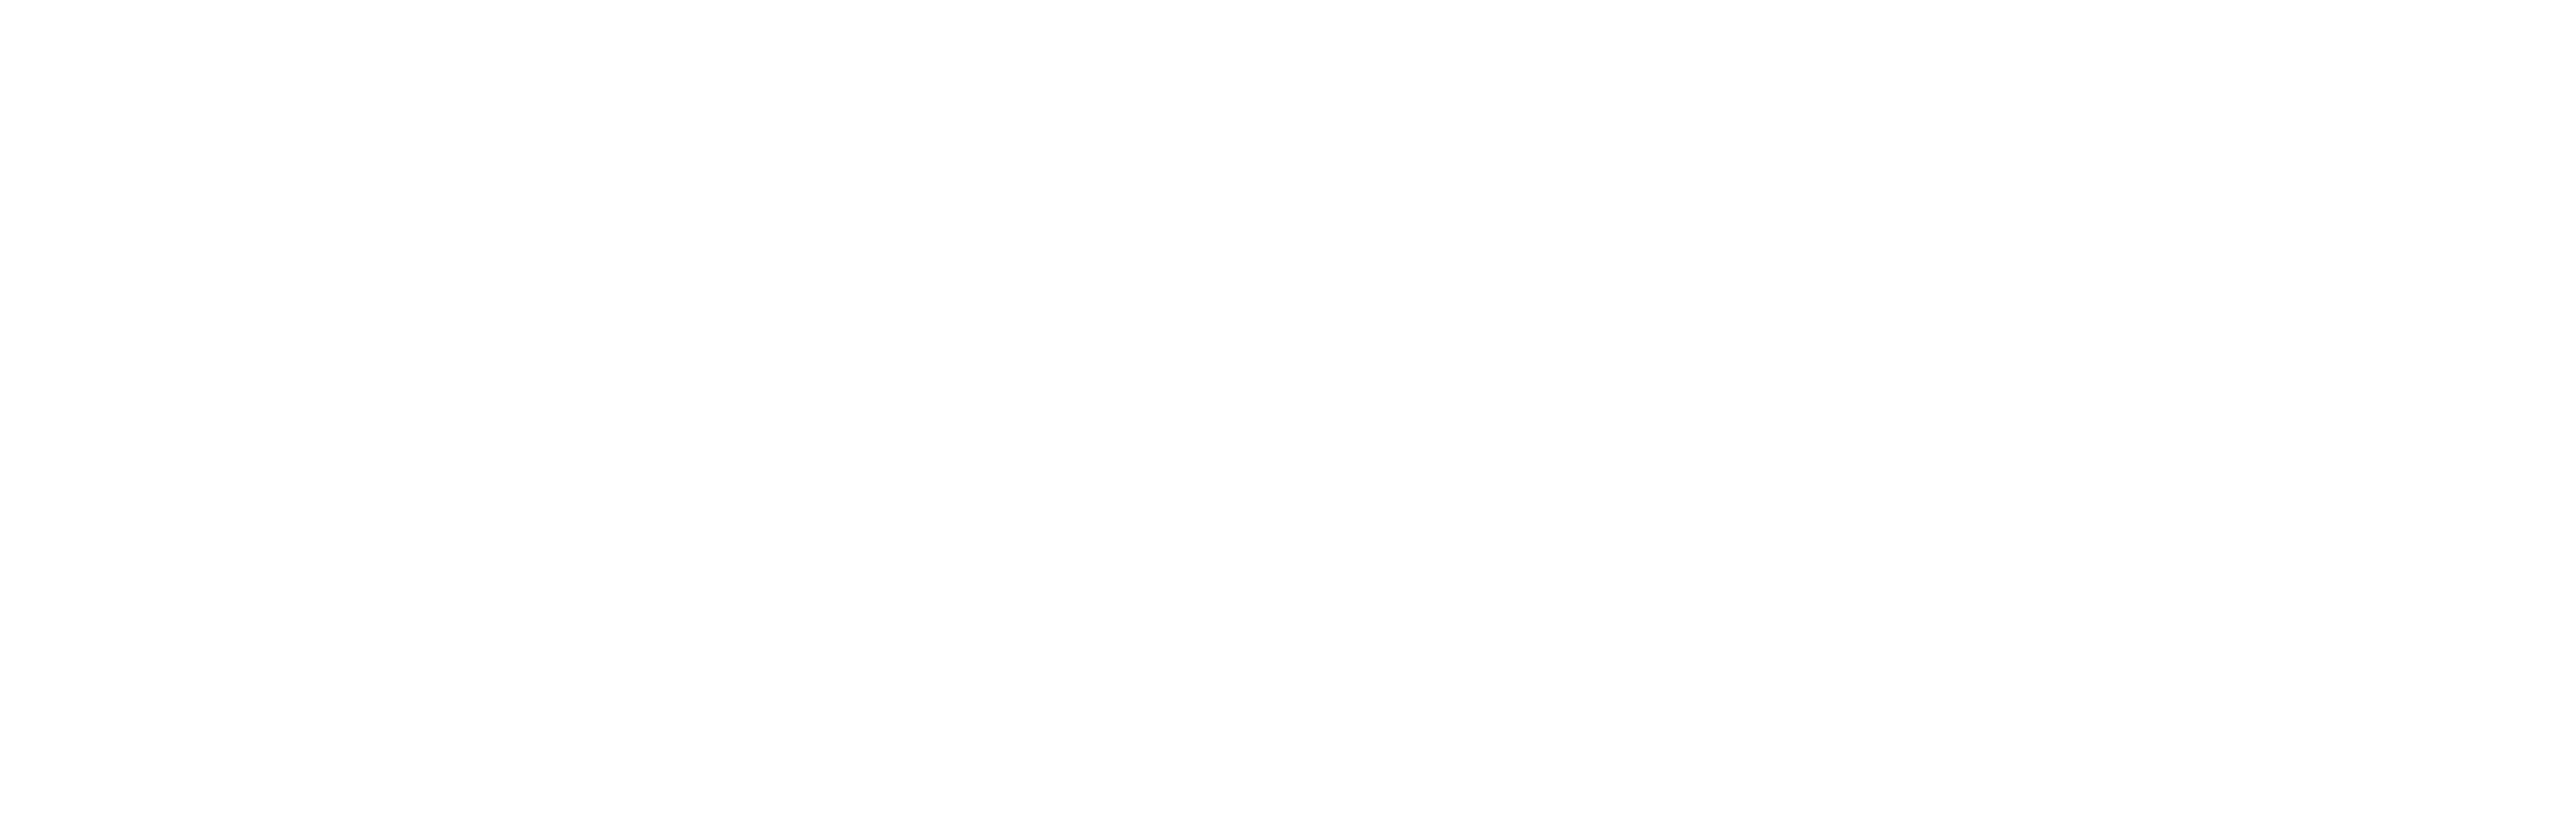 Billy Bathgate logo